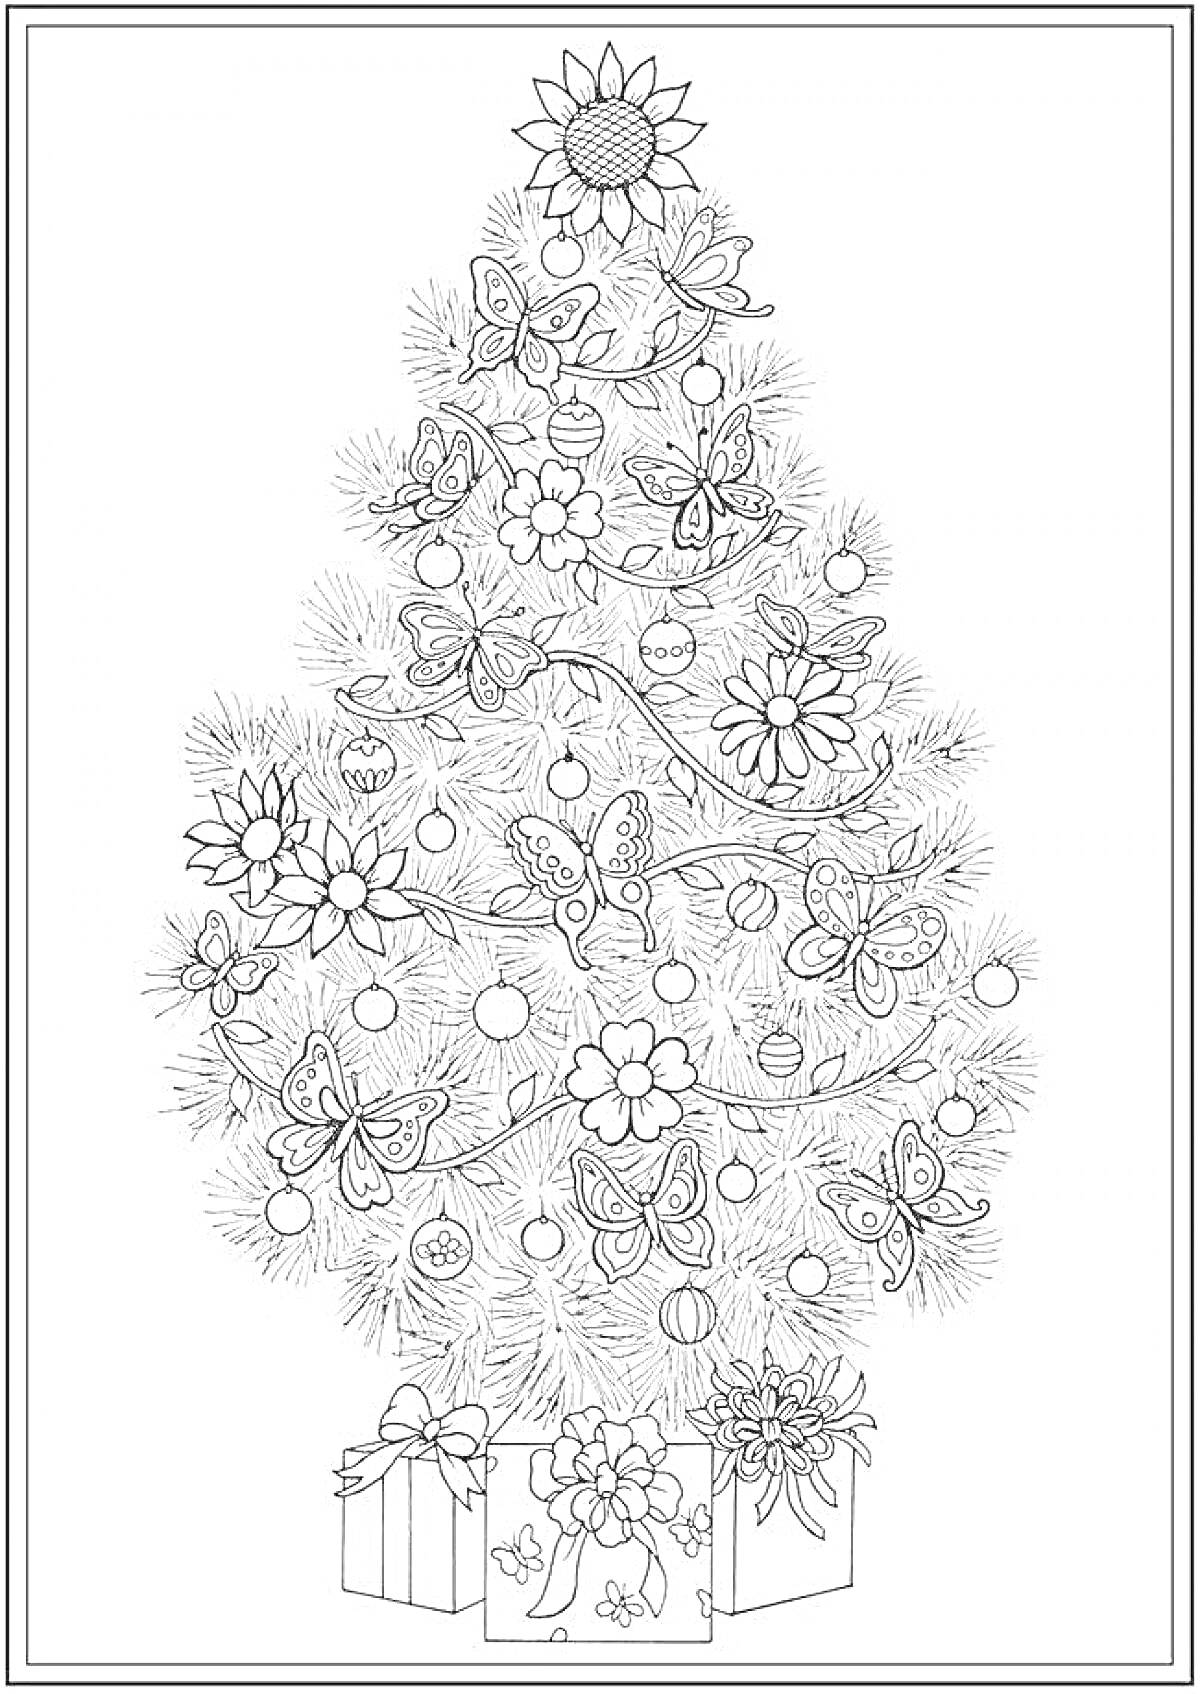 Раскраска Раскраска антистресс елка с цветами, бабочками, шарами и подарками